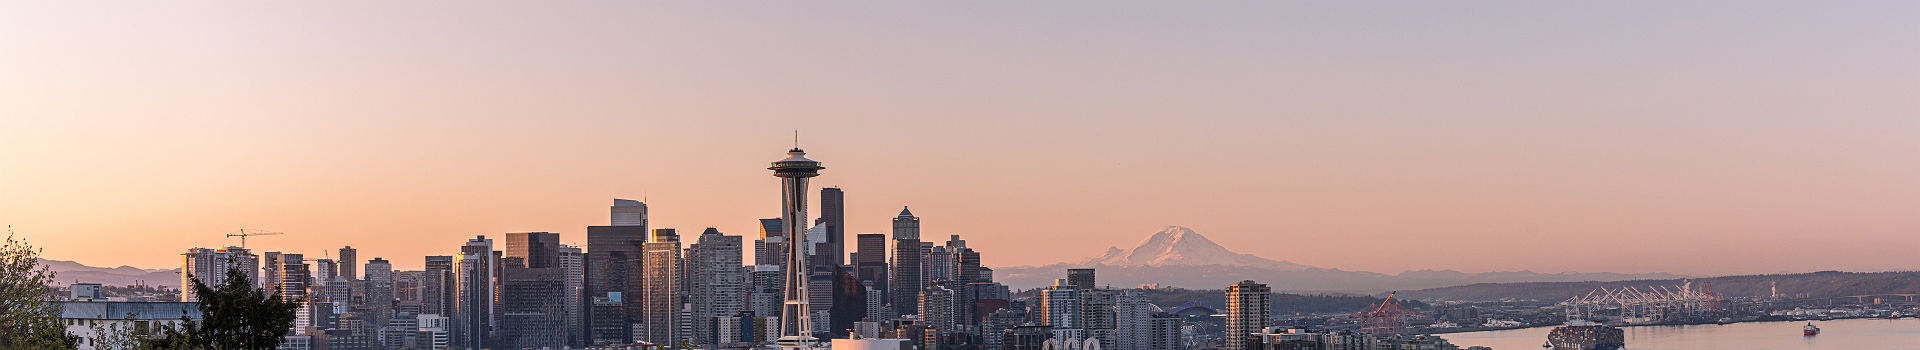 Skyline de Seattle, WA, USA